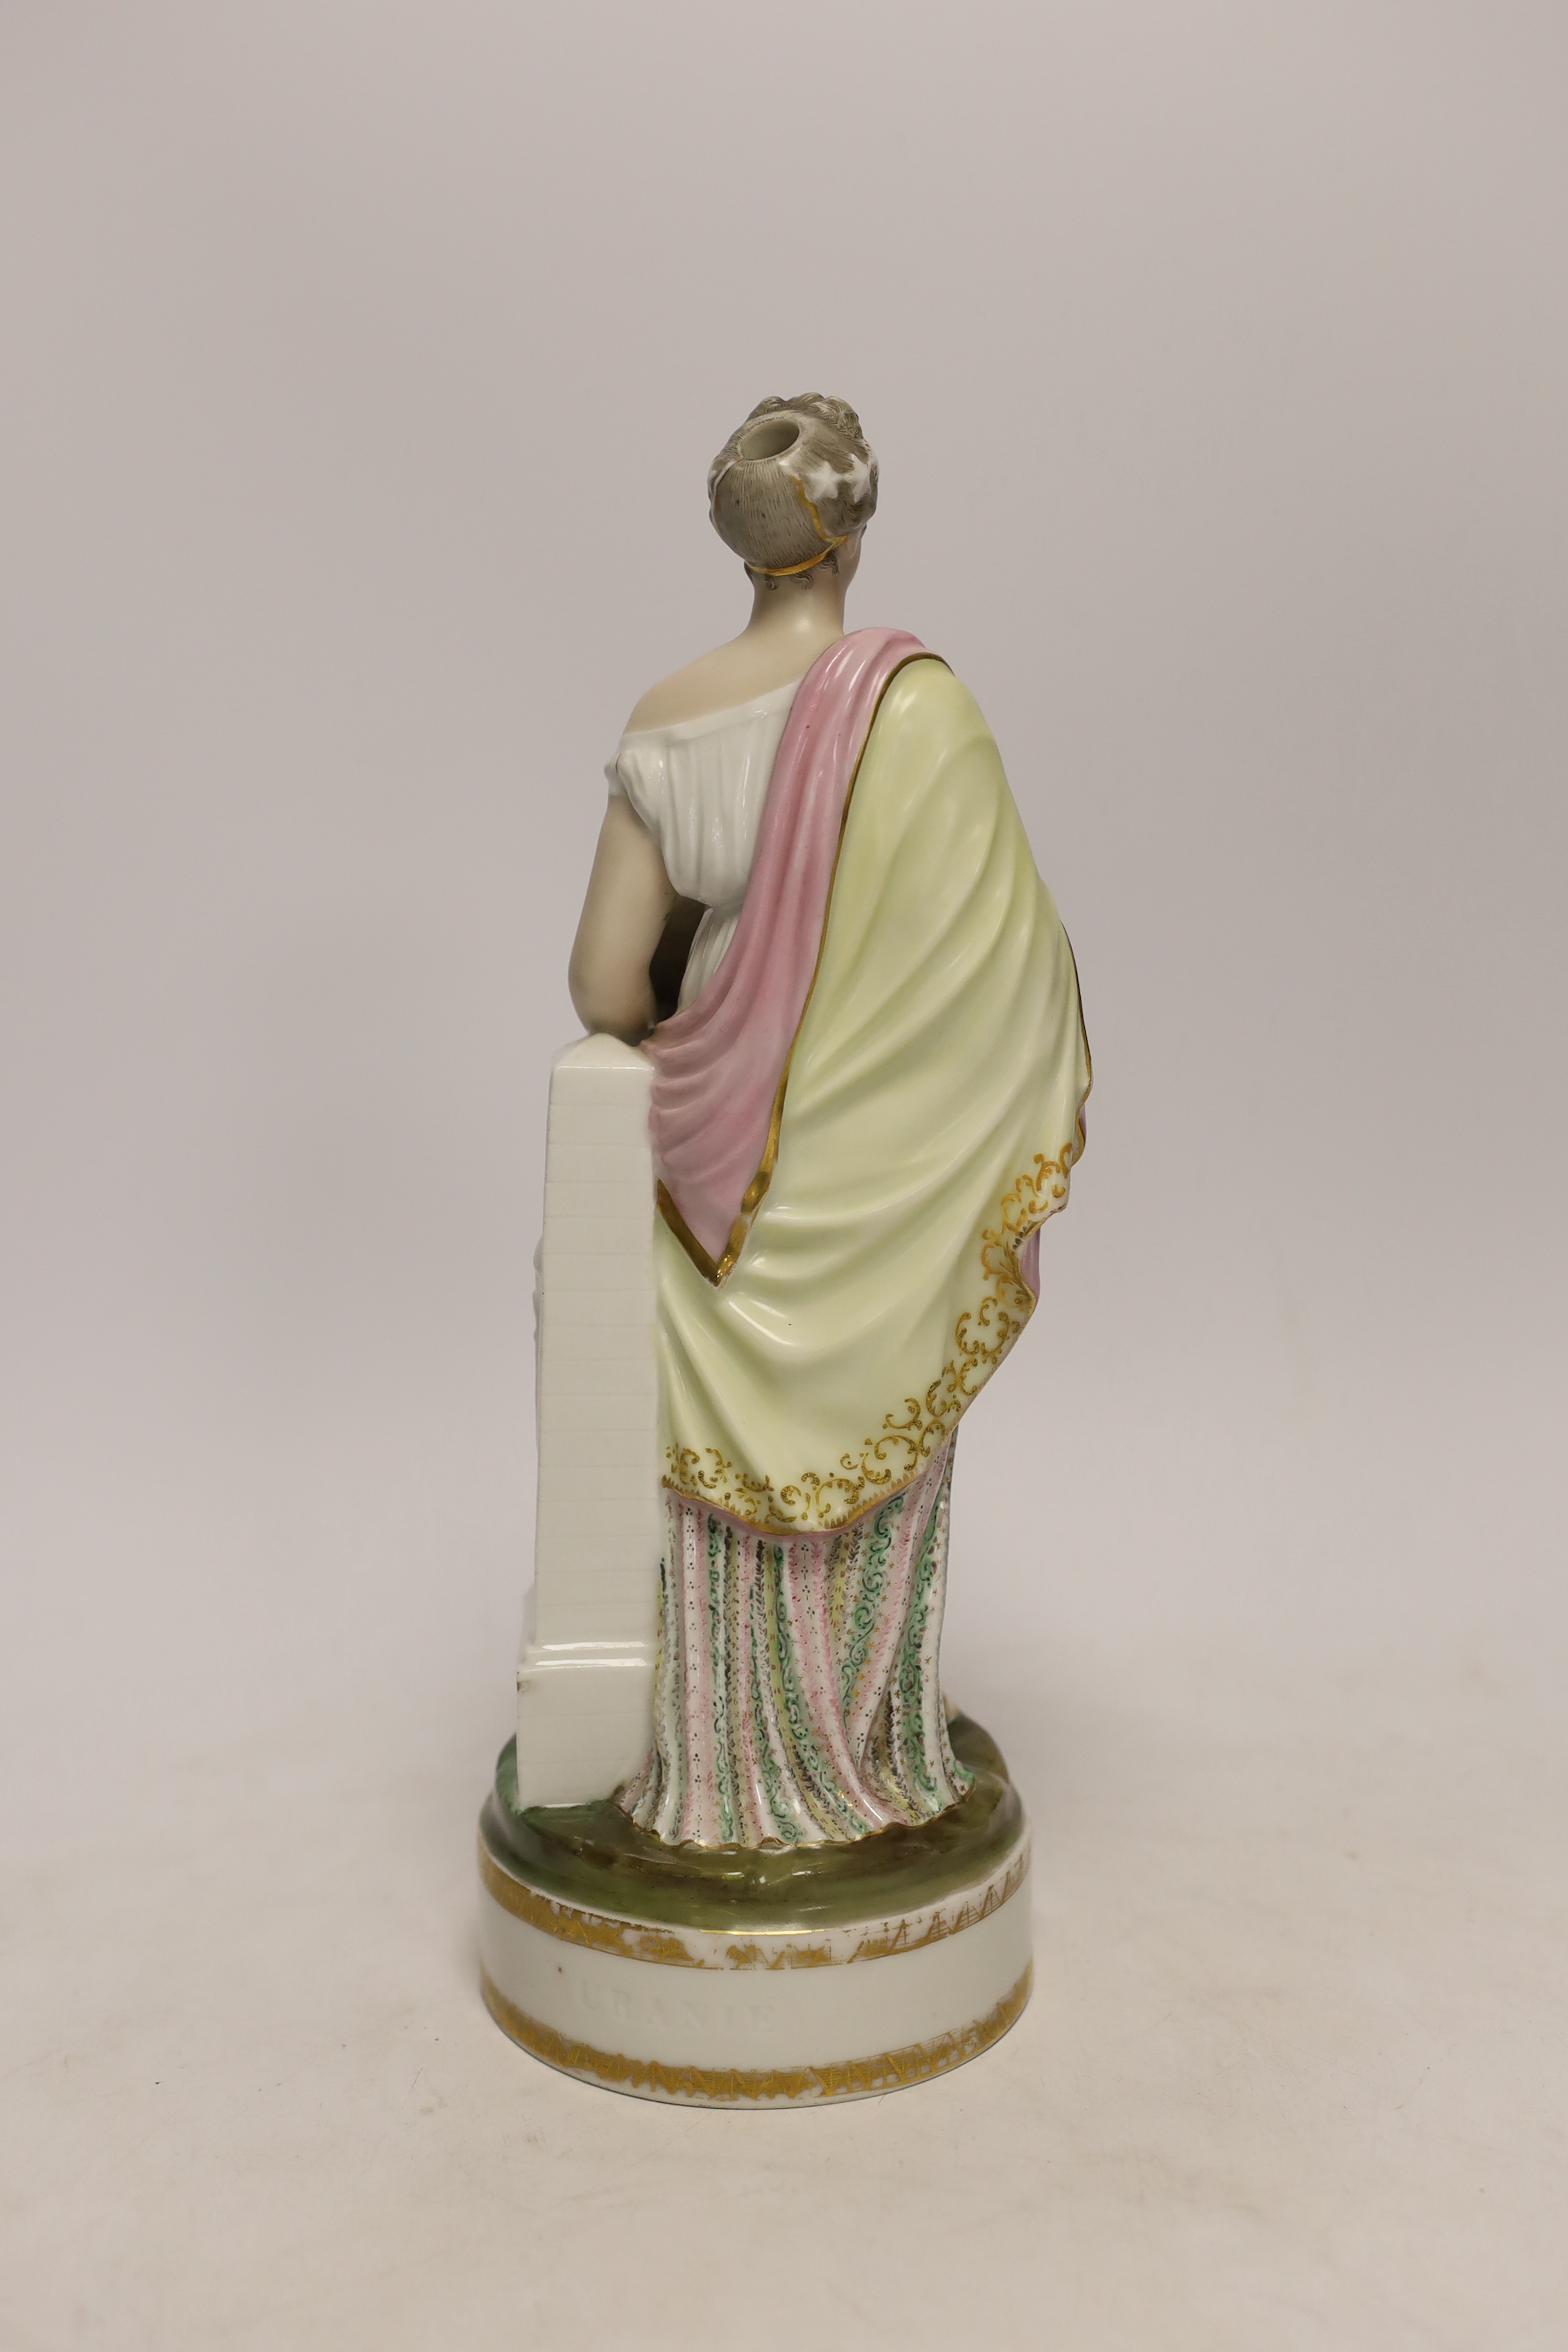 An early 19th century Paris porcelain figure impressed 'Uranie', 28cm high